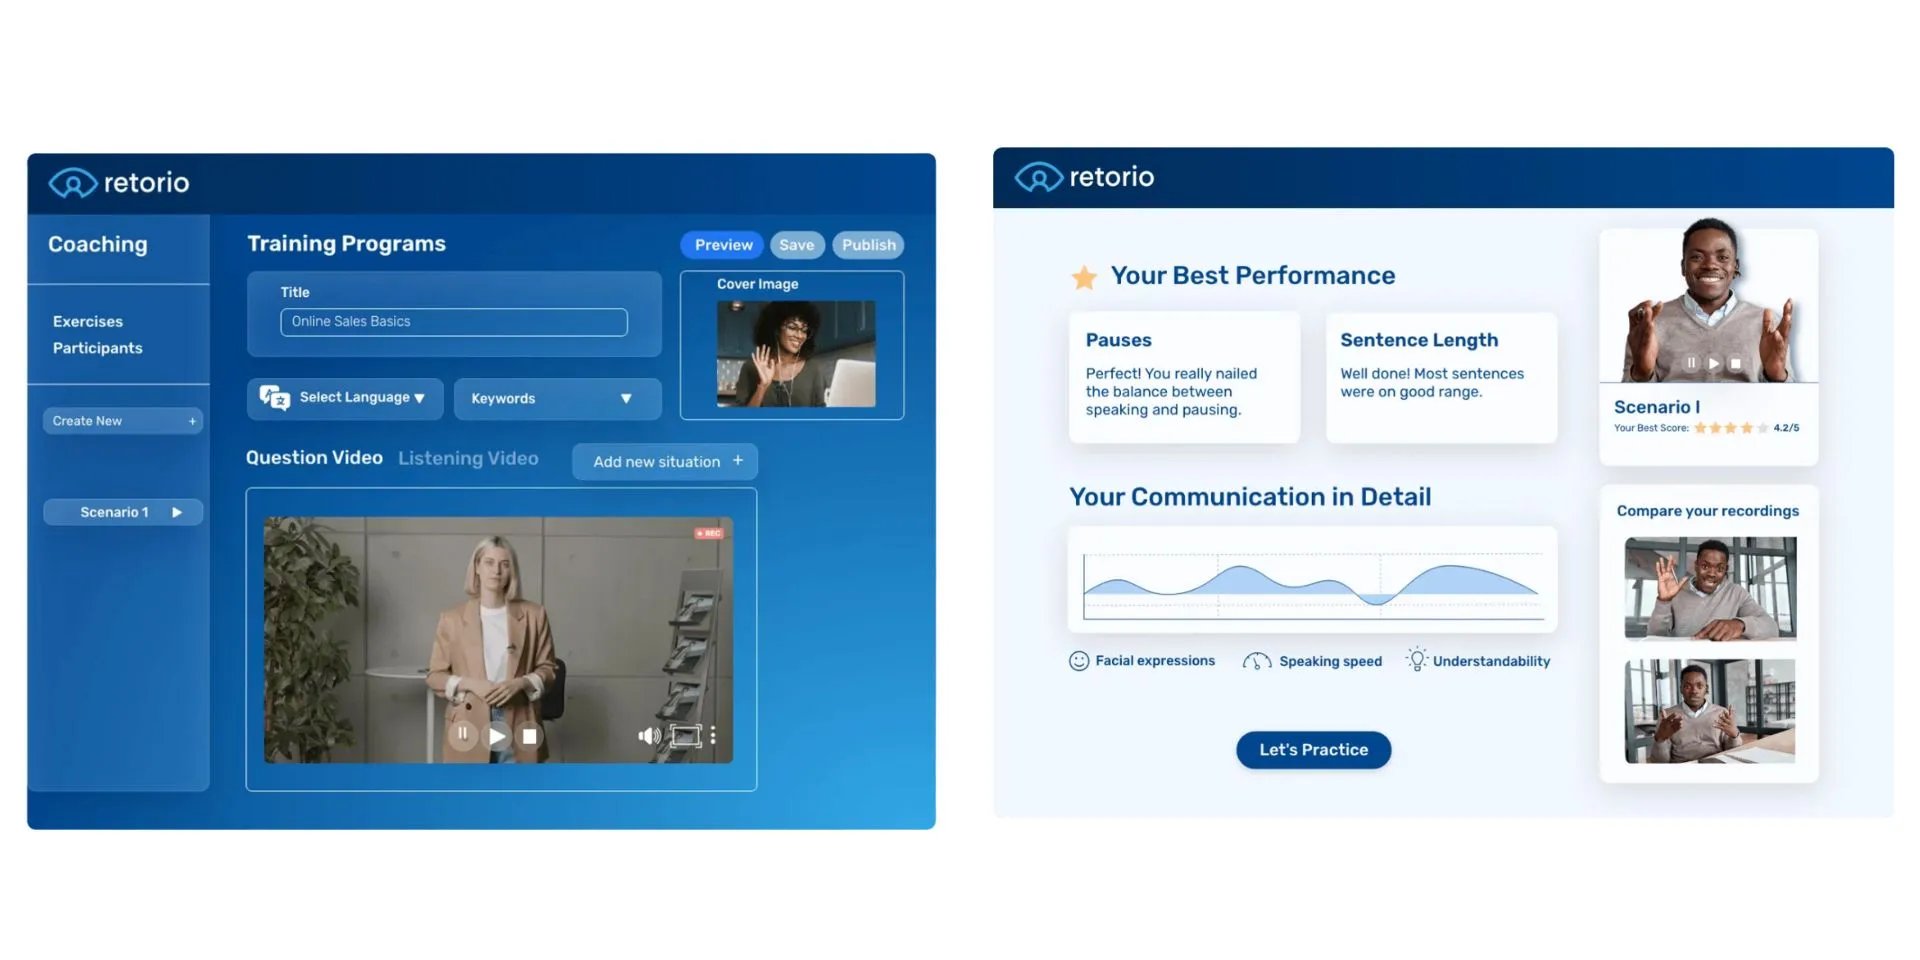 Dashboard of Retorio's behavioral intelligence training platform showing leadership training